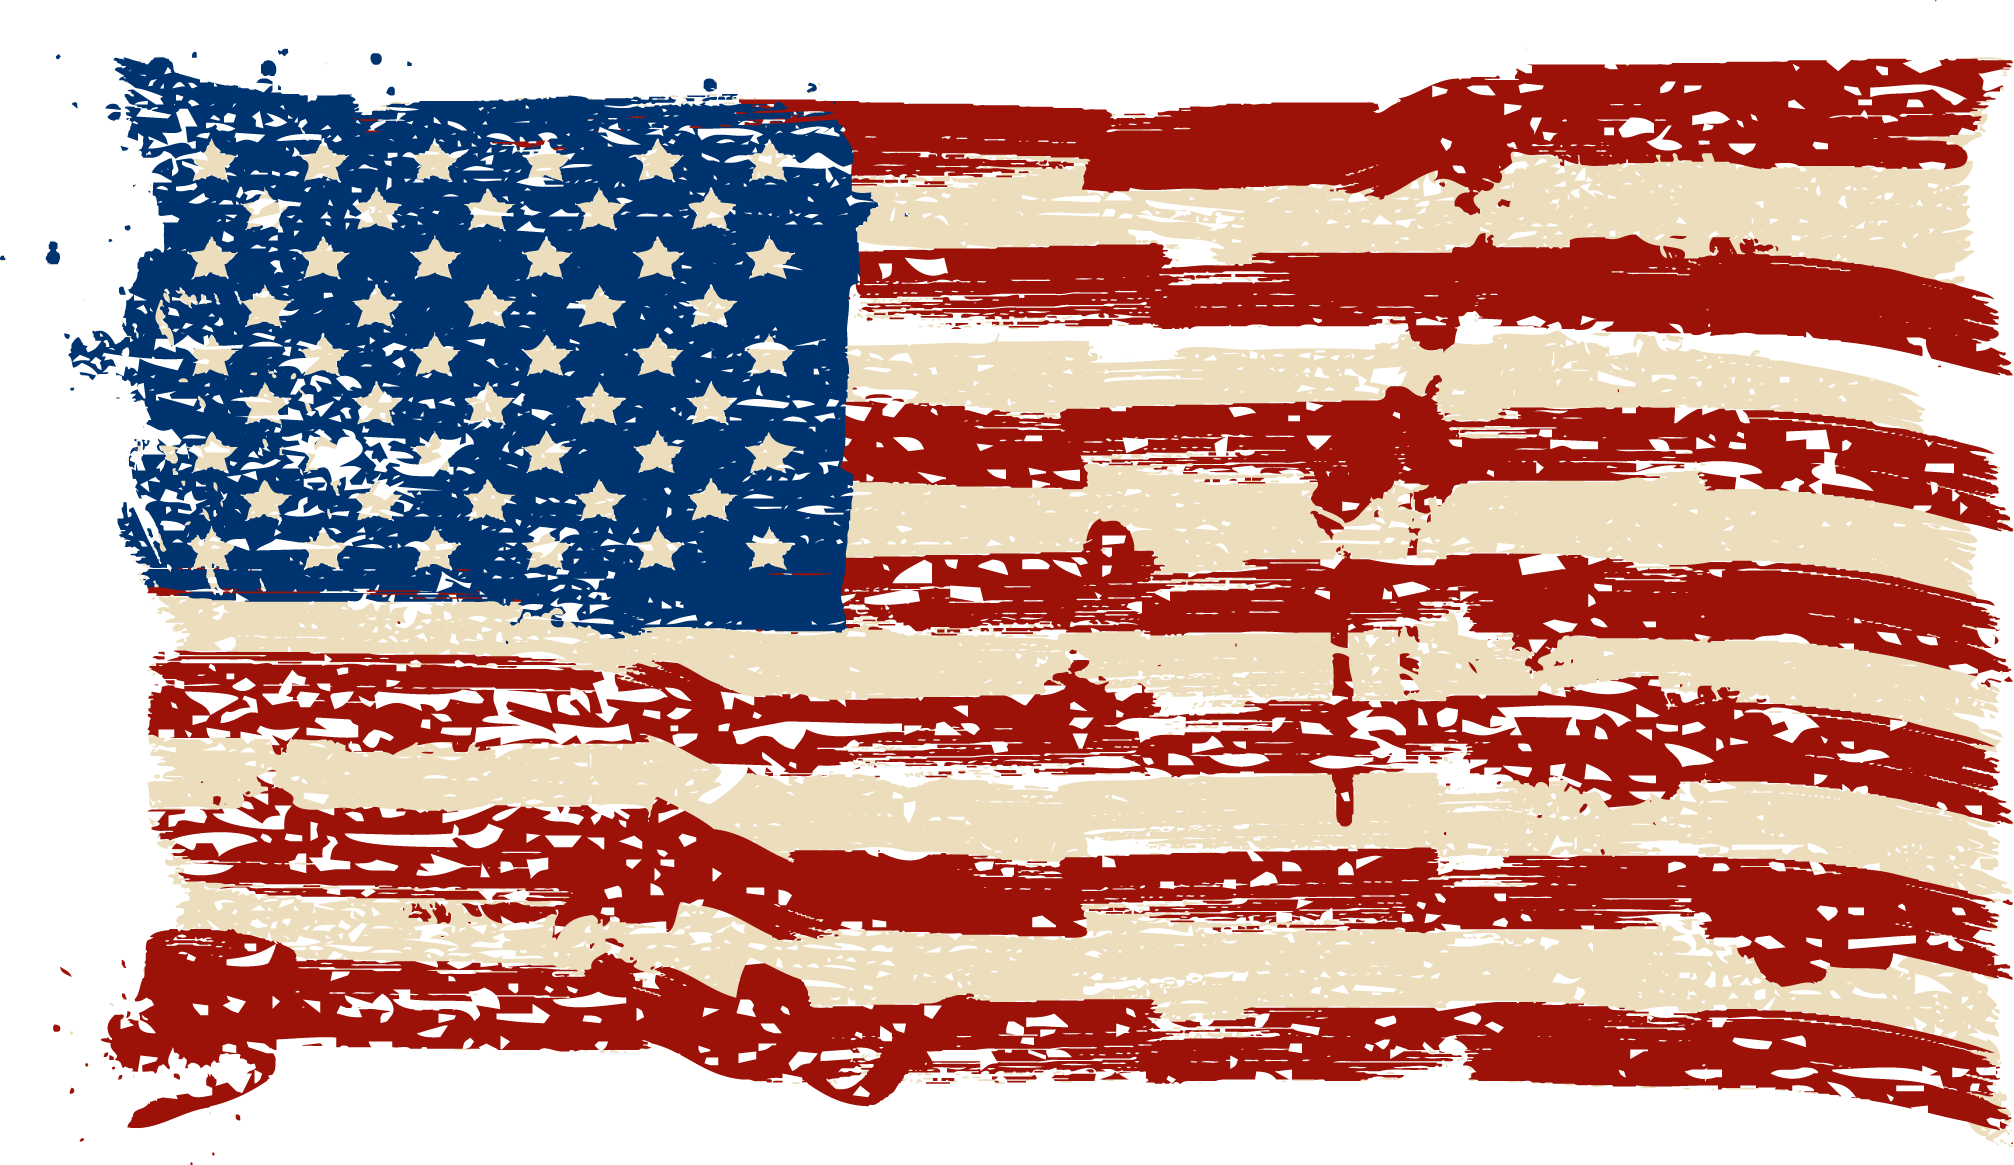 american flag clipart tattered